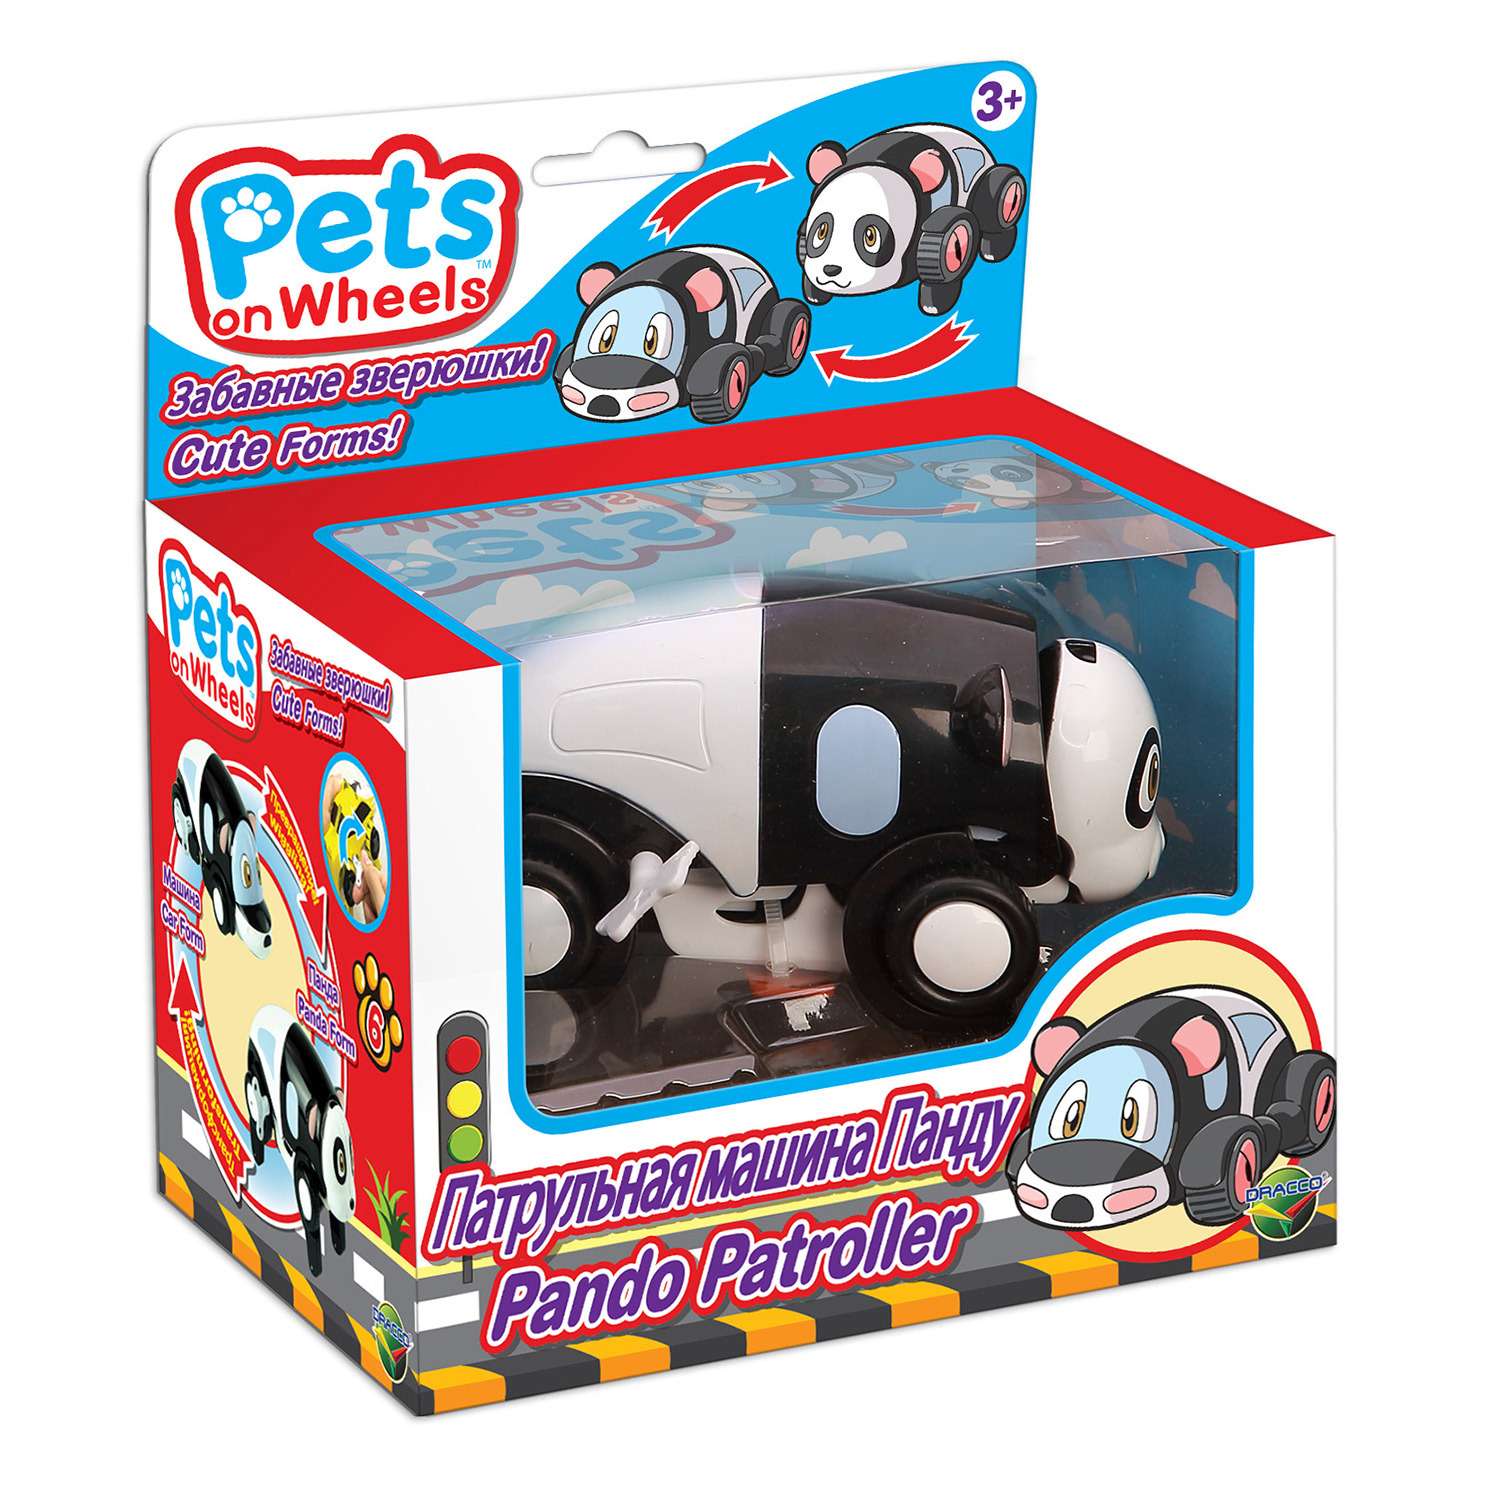 Машинка Панда. Машинка Панда на колесах. Машинки Панда игрушки. Панда на машинке игрушечной. Машинки pets